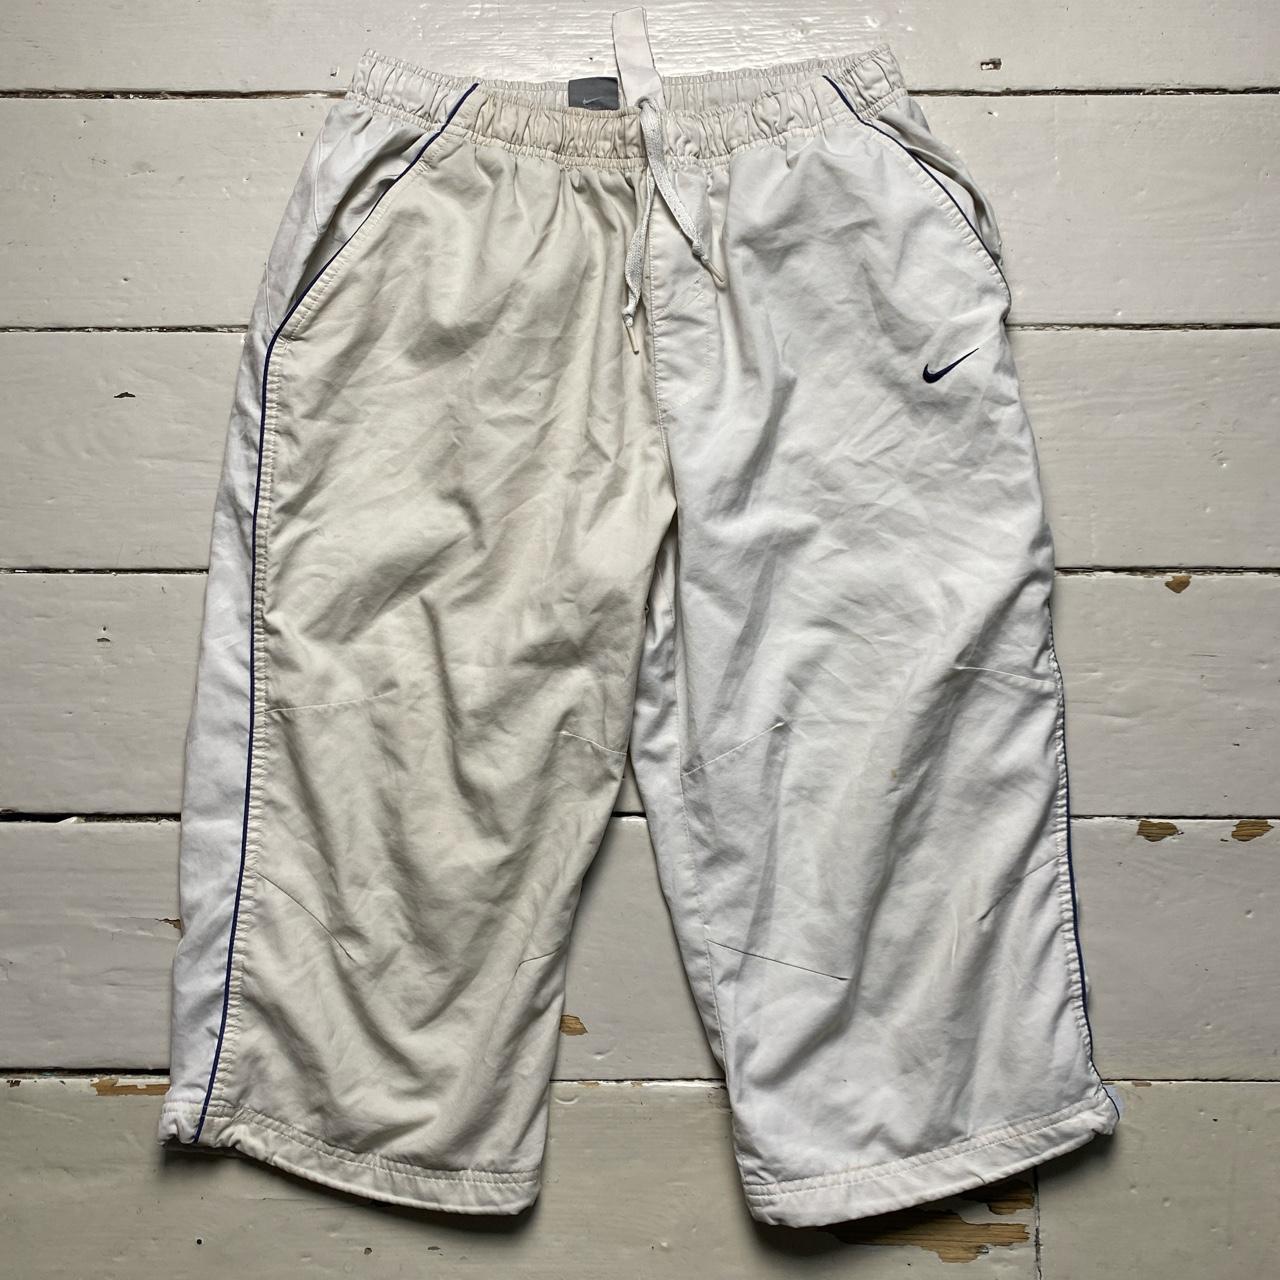 Nike Vintage Swoosh White/Cream Shell Track Pant Shorts